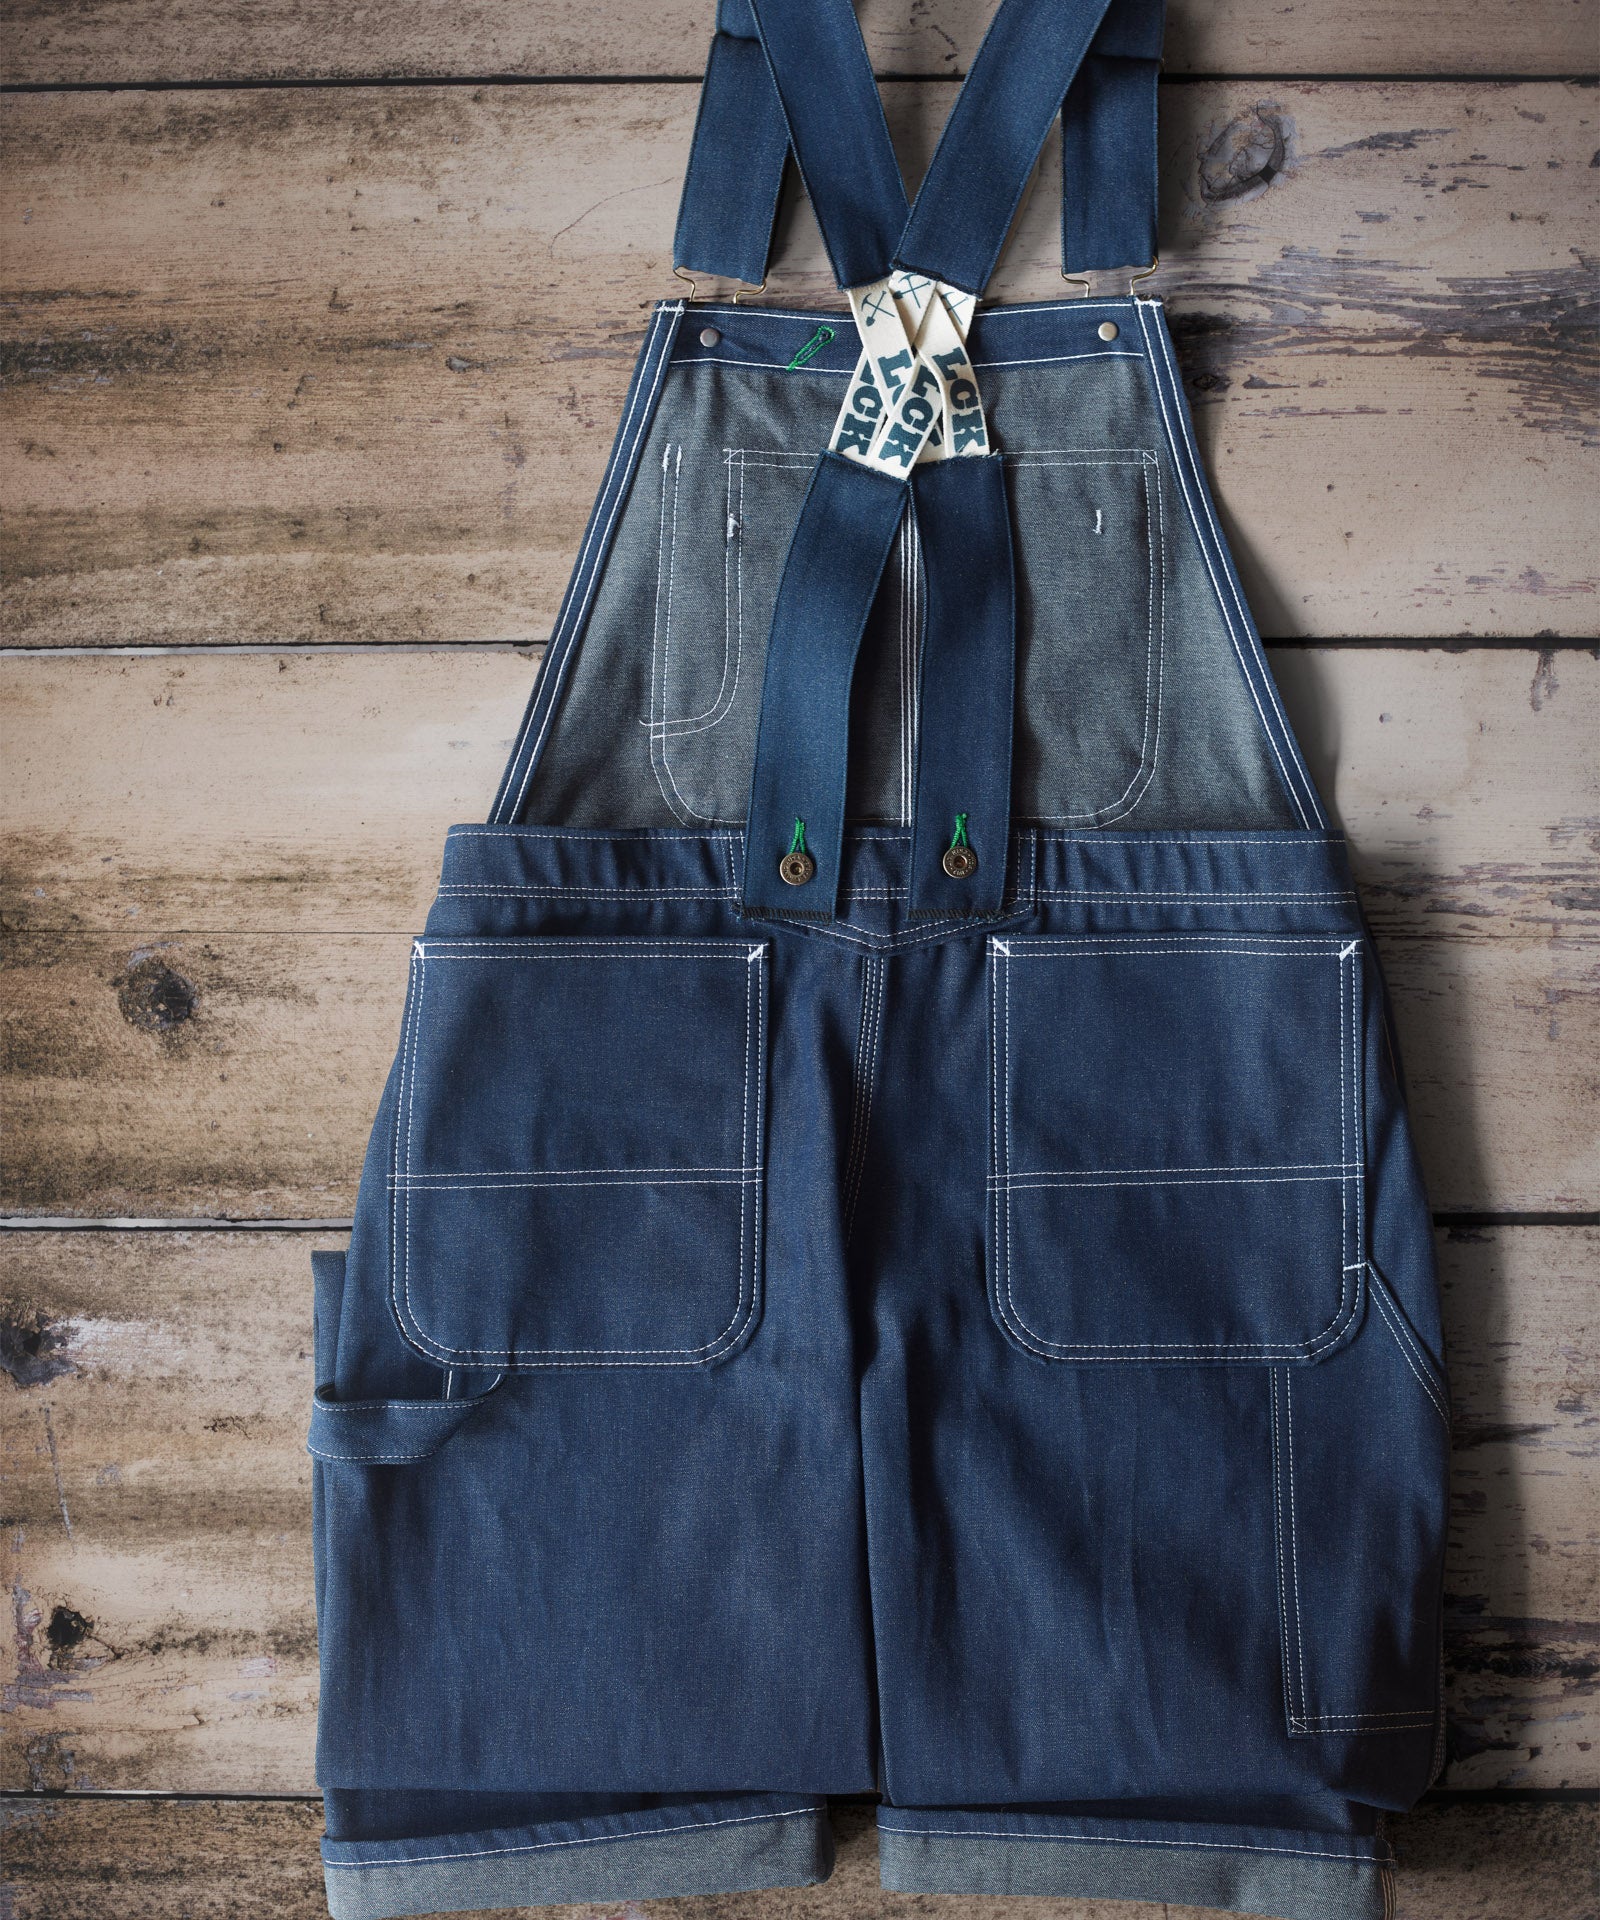 Pointer Brand Vintage Low Back Overall Bibs Made in USA 42X30 Blue Denim Men